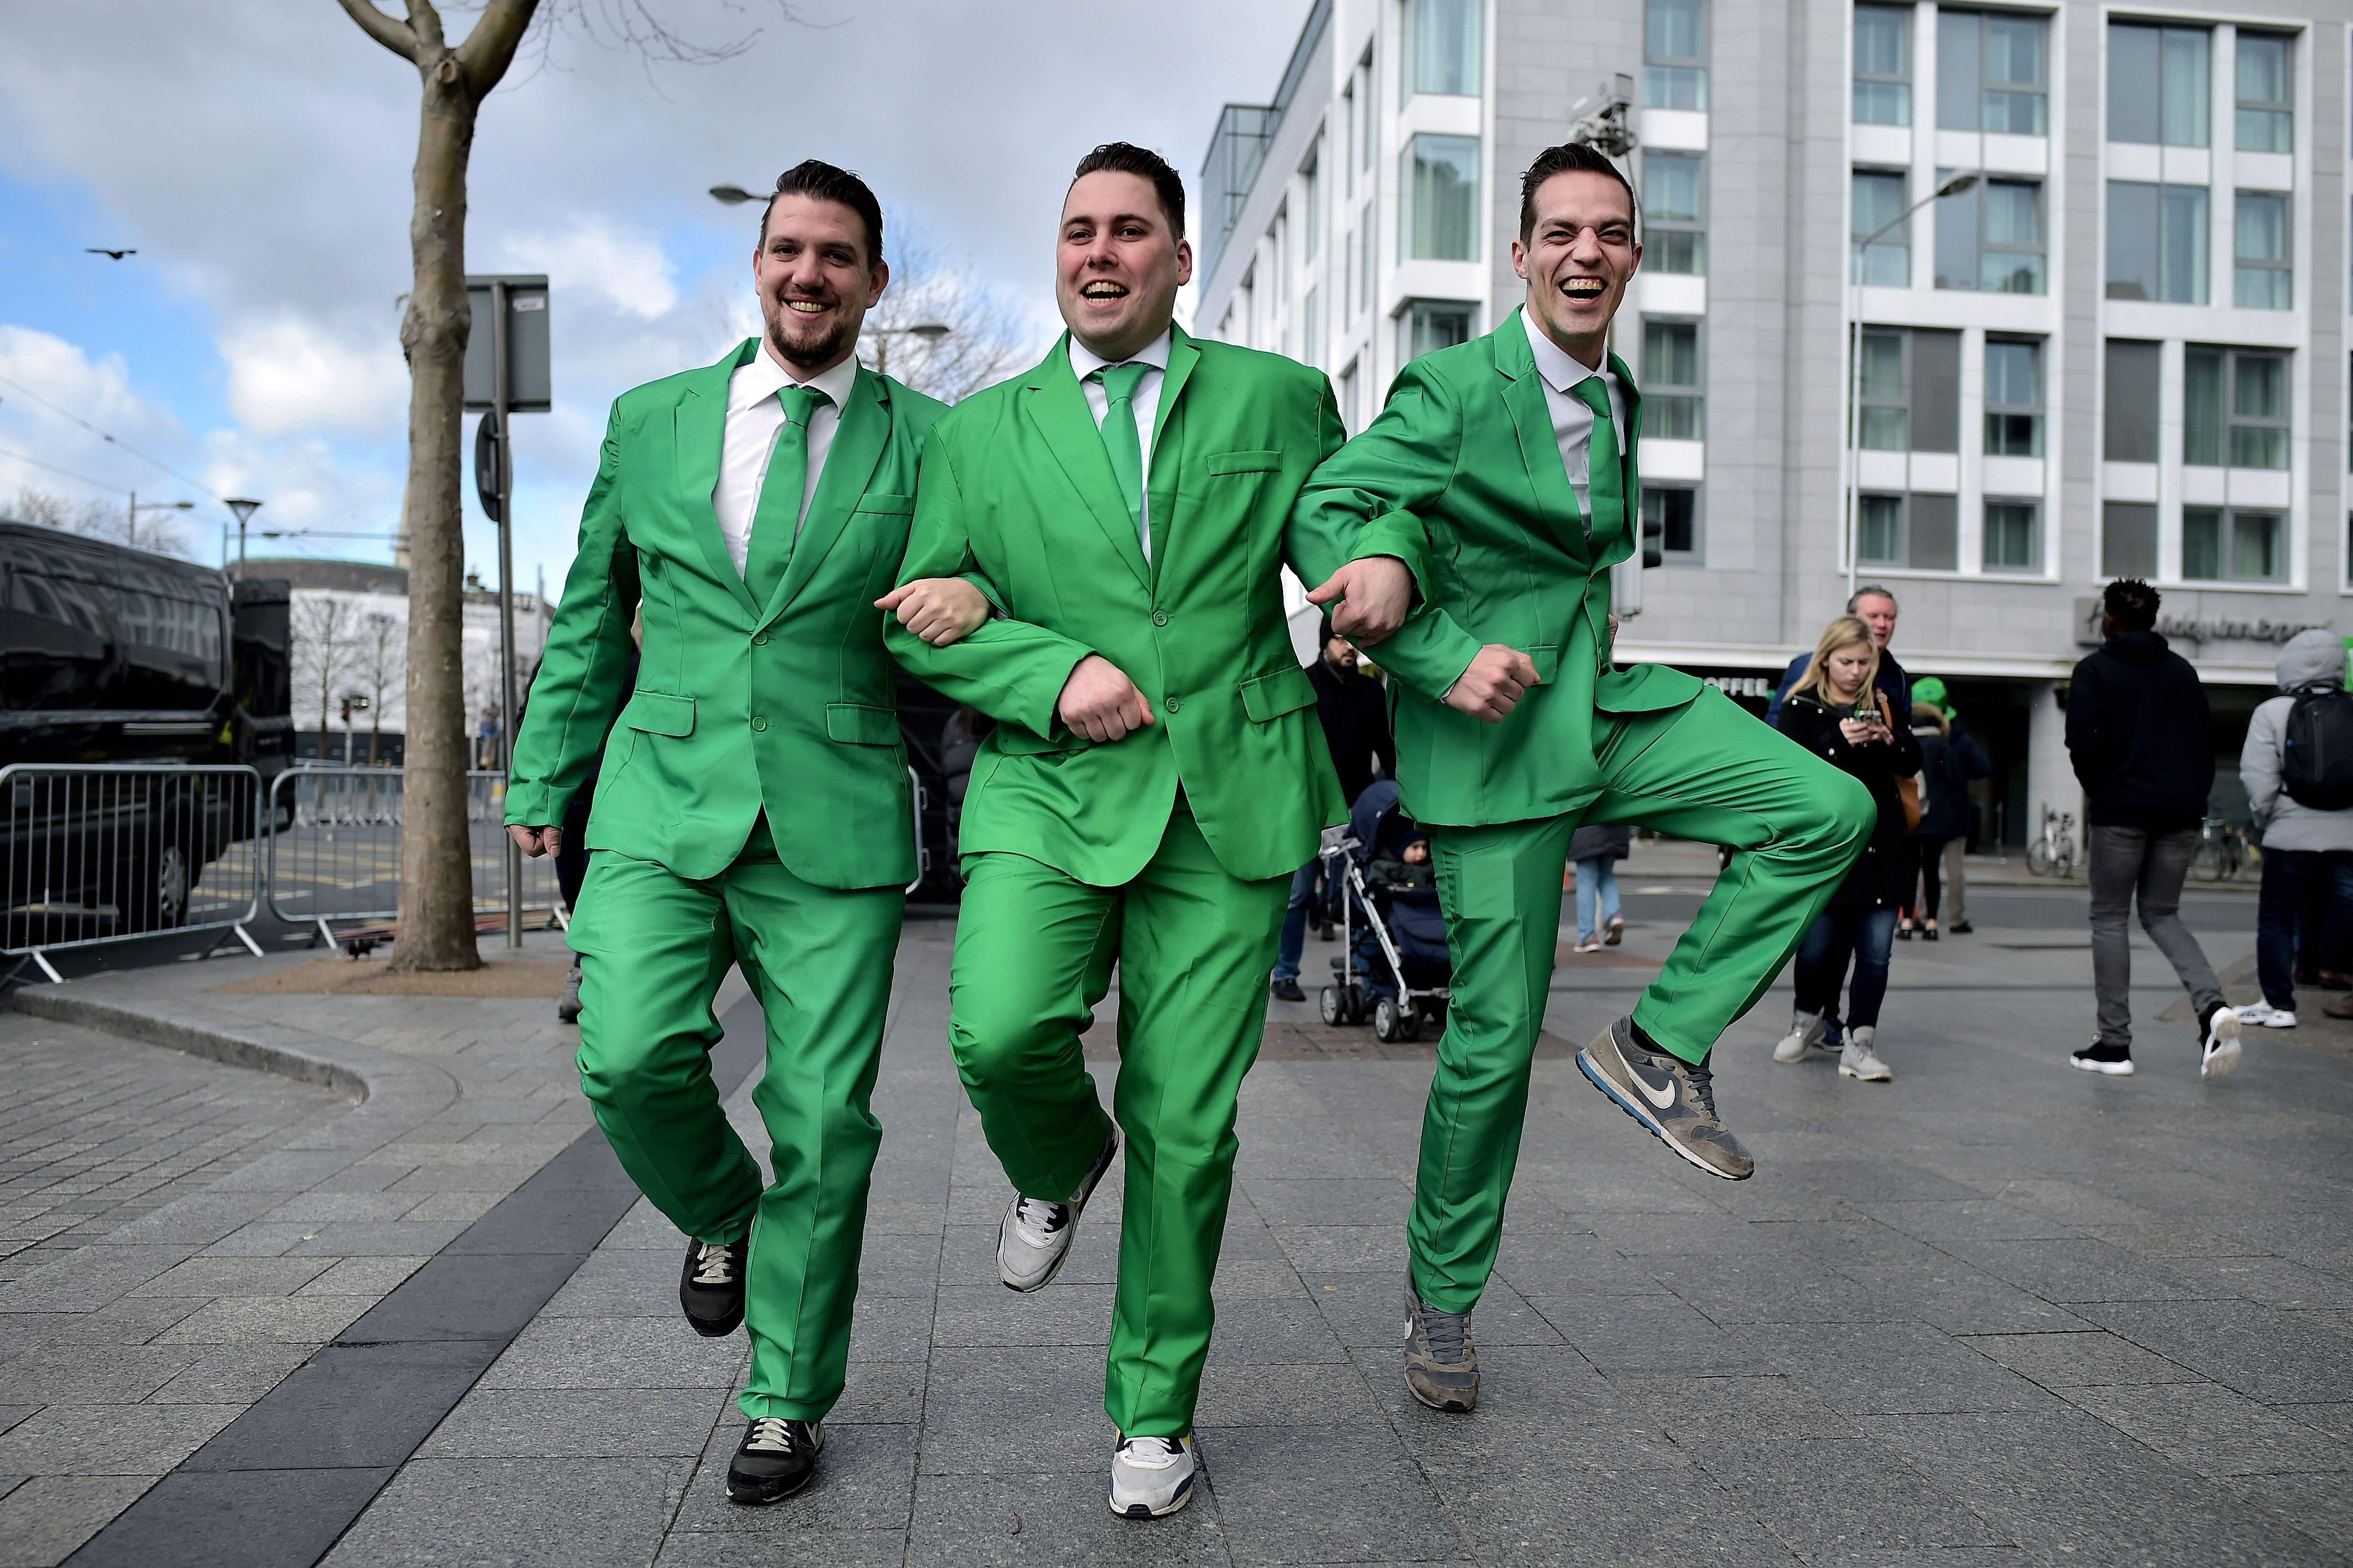 Цвет святого патрика. День Святого Патрика в Ирландии. Одежда в Ирландии в день Святого Патрика. День Святого Патрика в Дублине. Зеленый костюм.